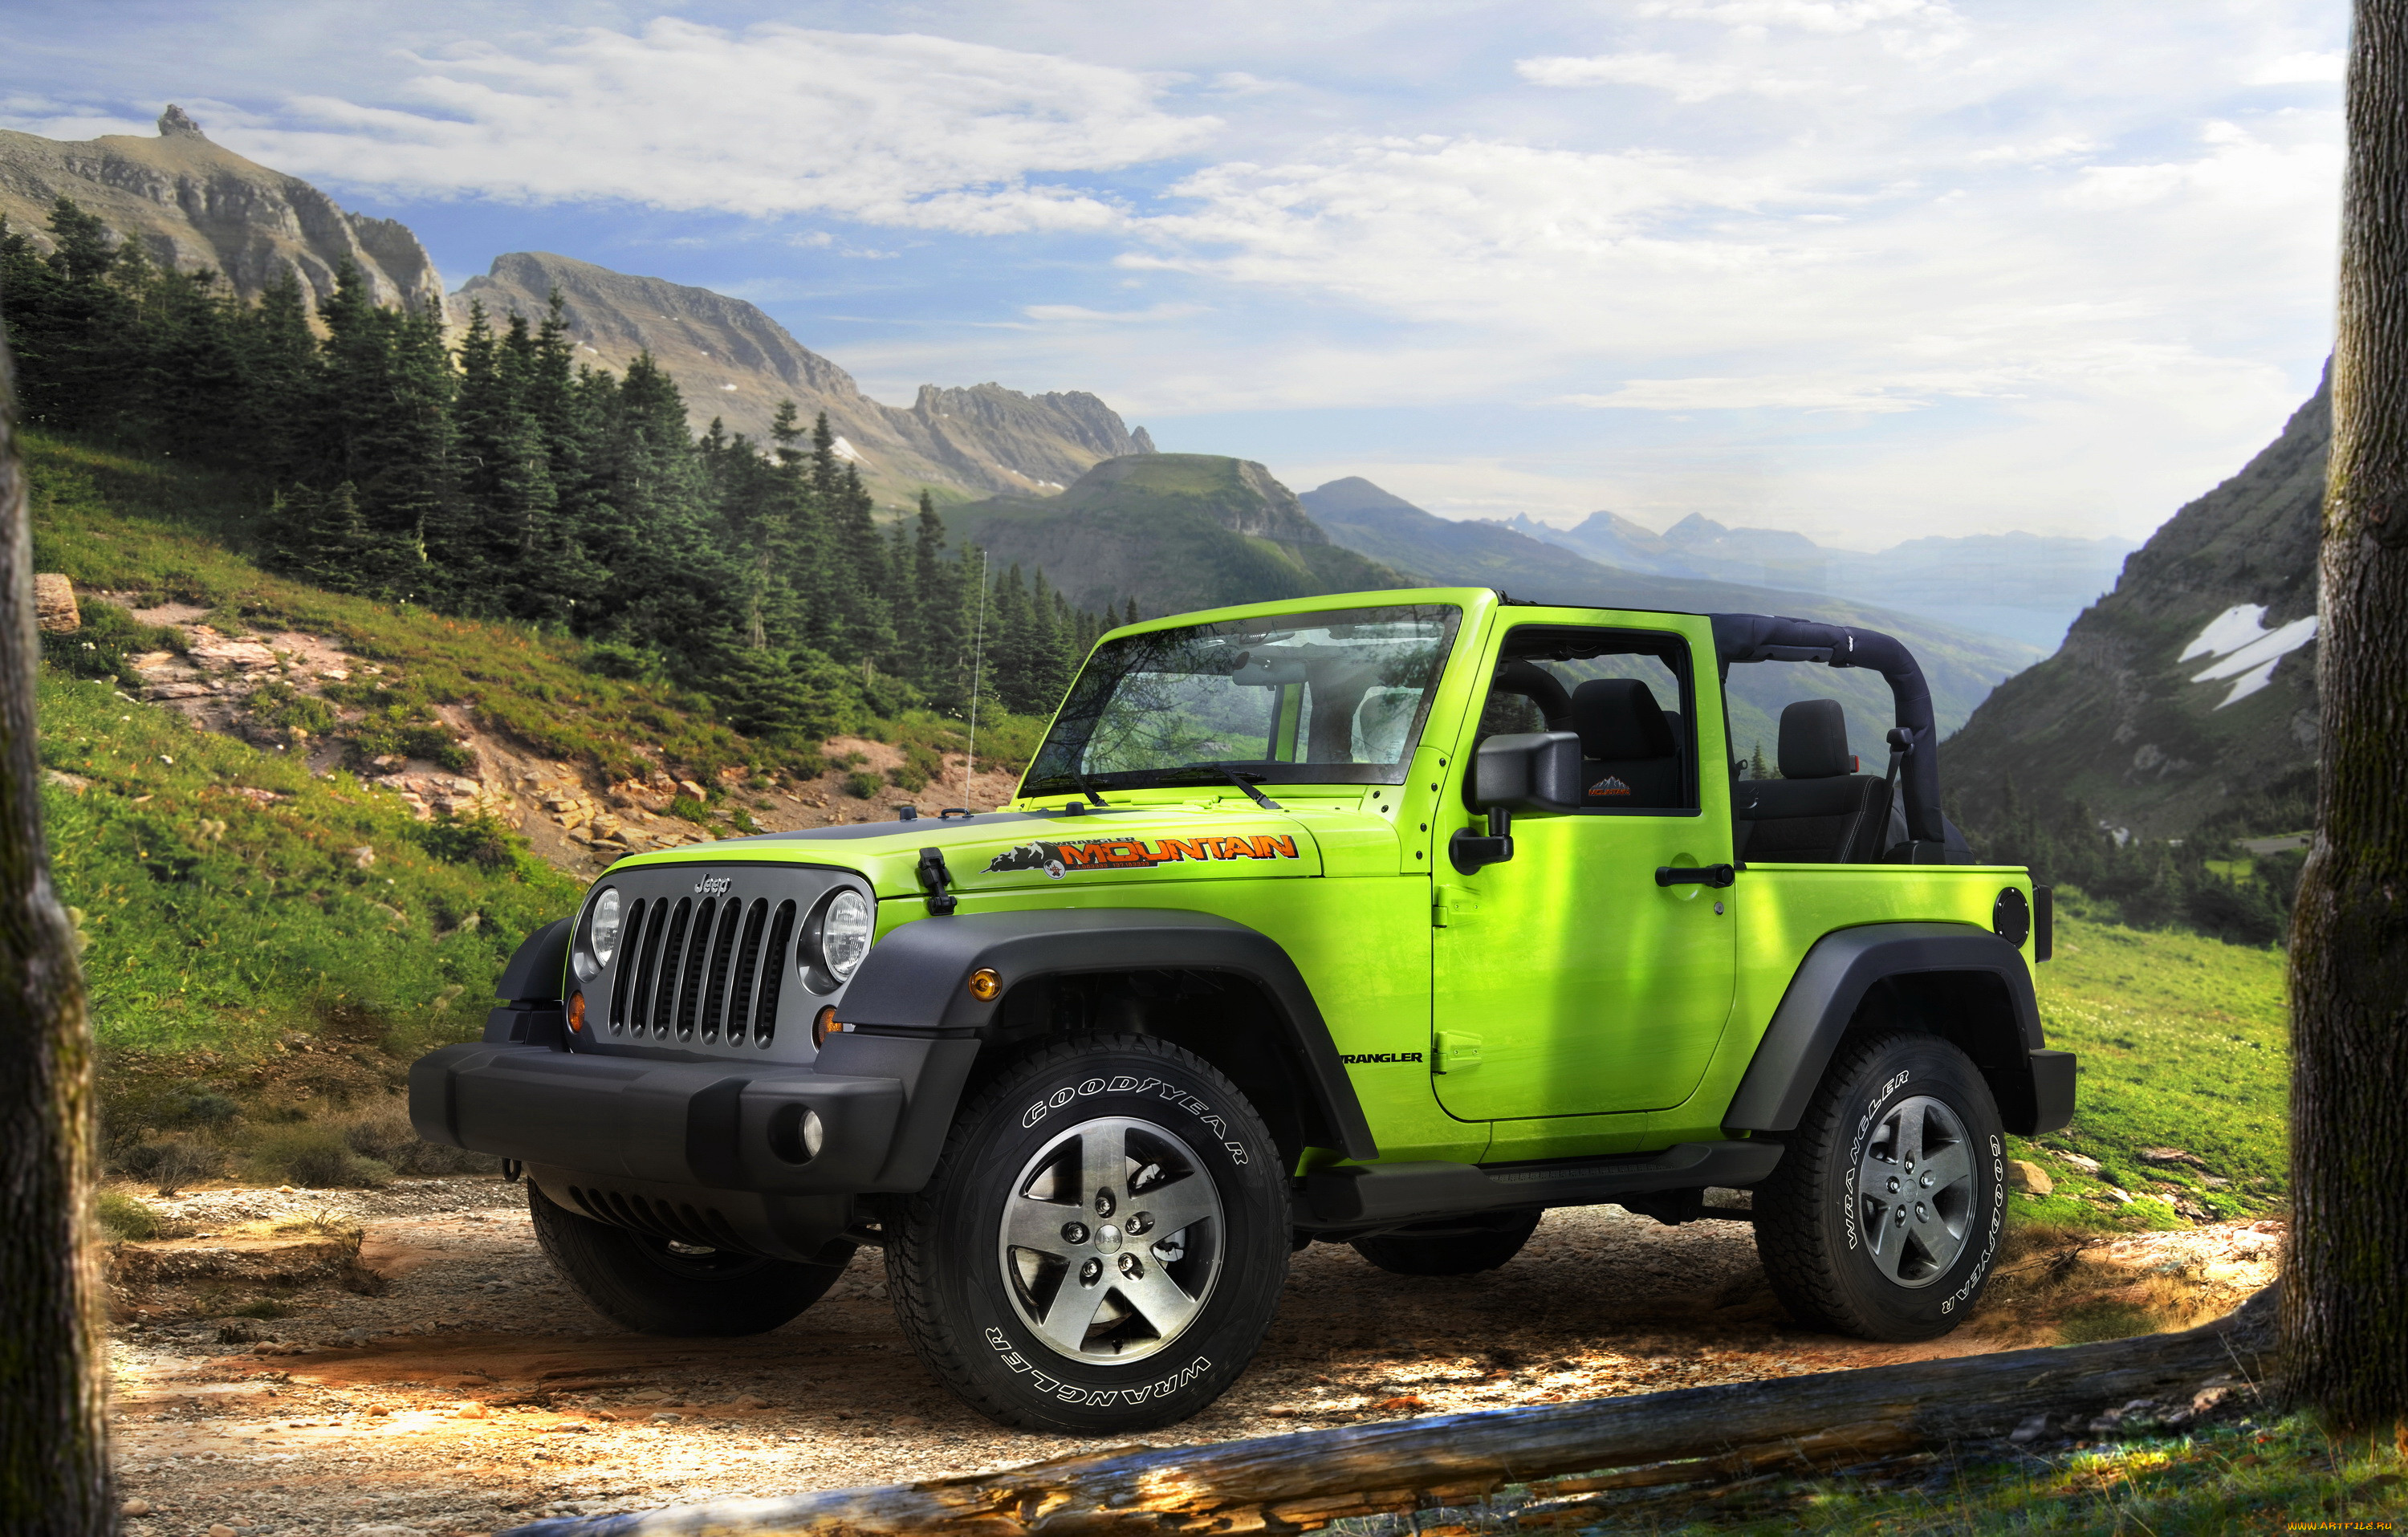 2012 jeep wrangler mountain, , jeep, , wrangler